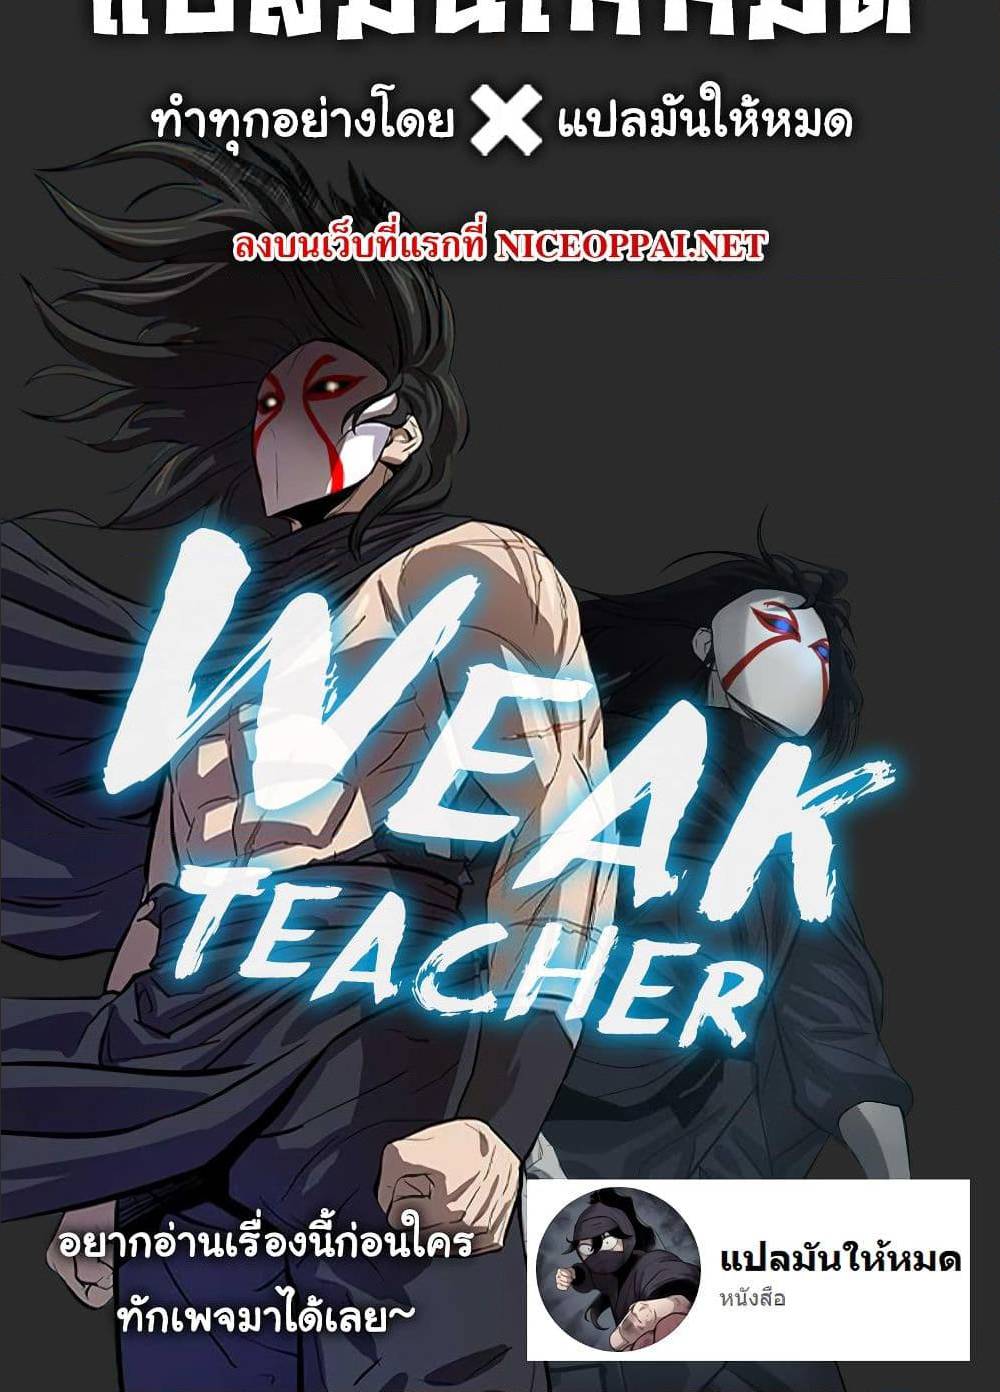 weak-teacher-9-96.jpg